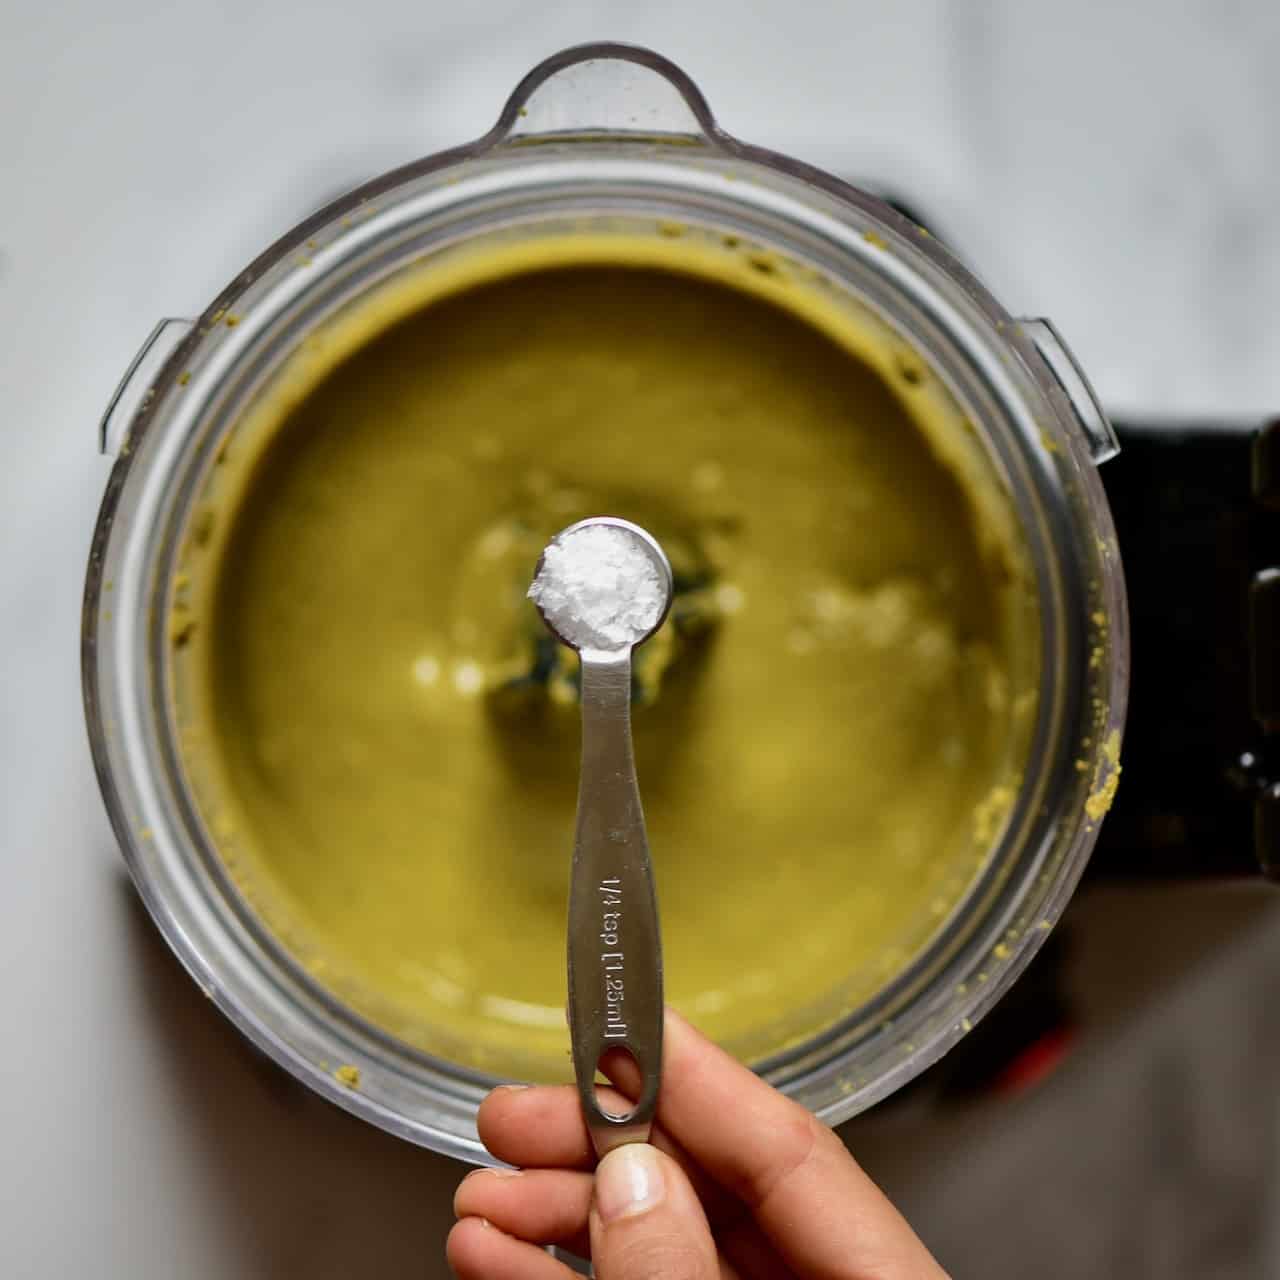 blending up some homemade pistachio butter